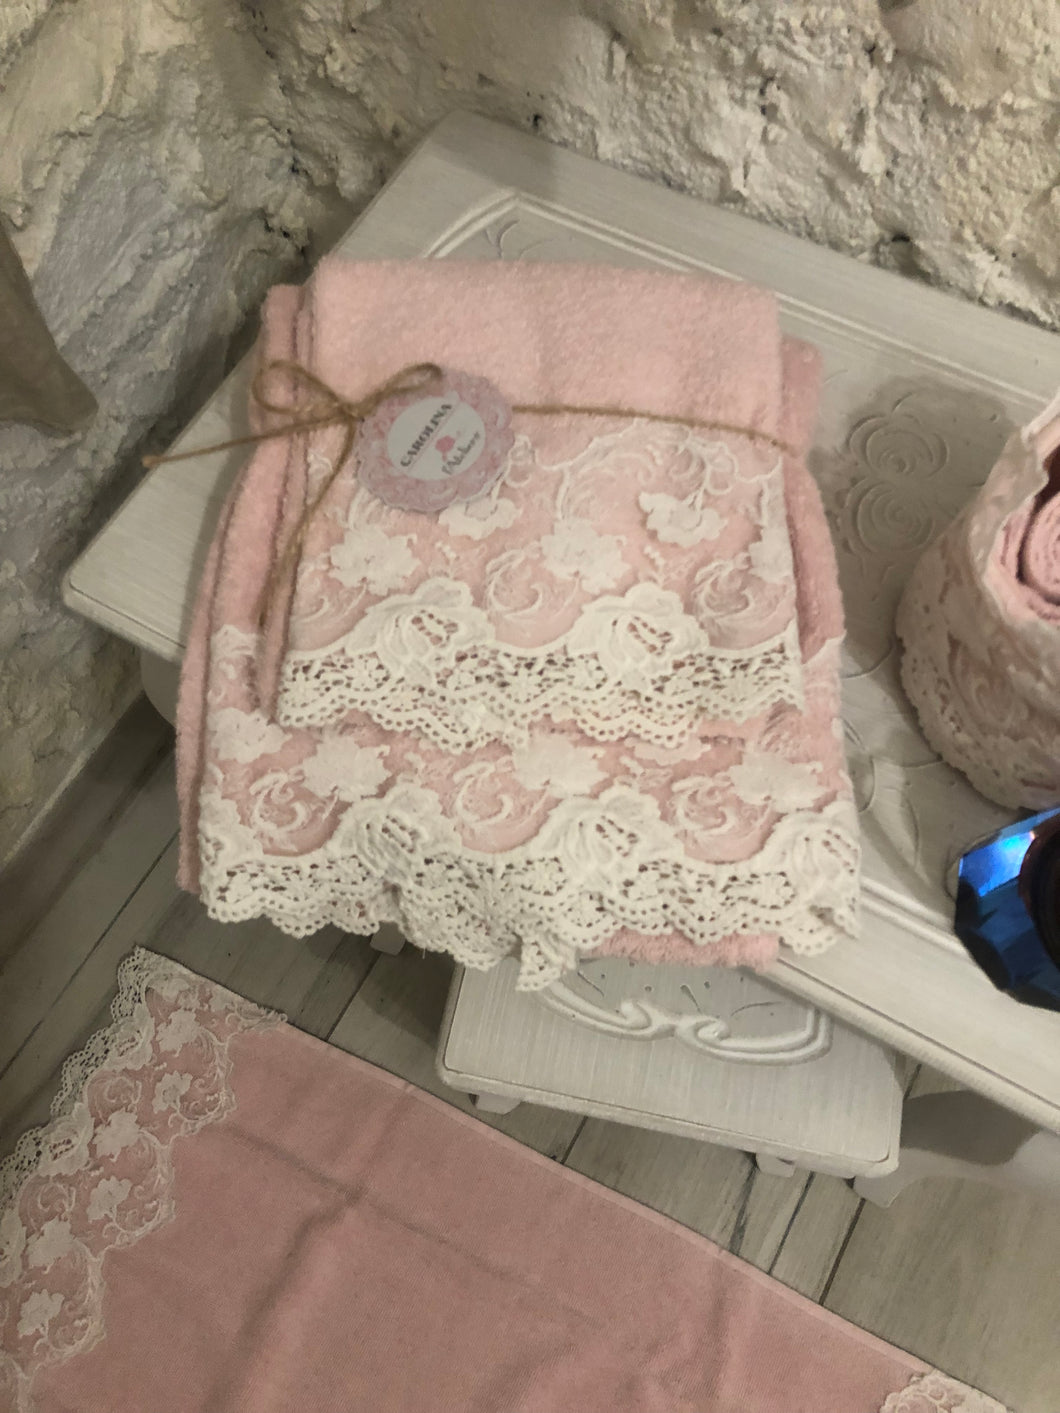 Coppia asciugamani serie Carolina rosa pizzo bianco